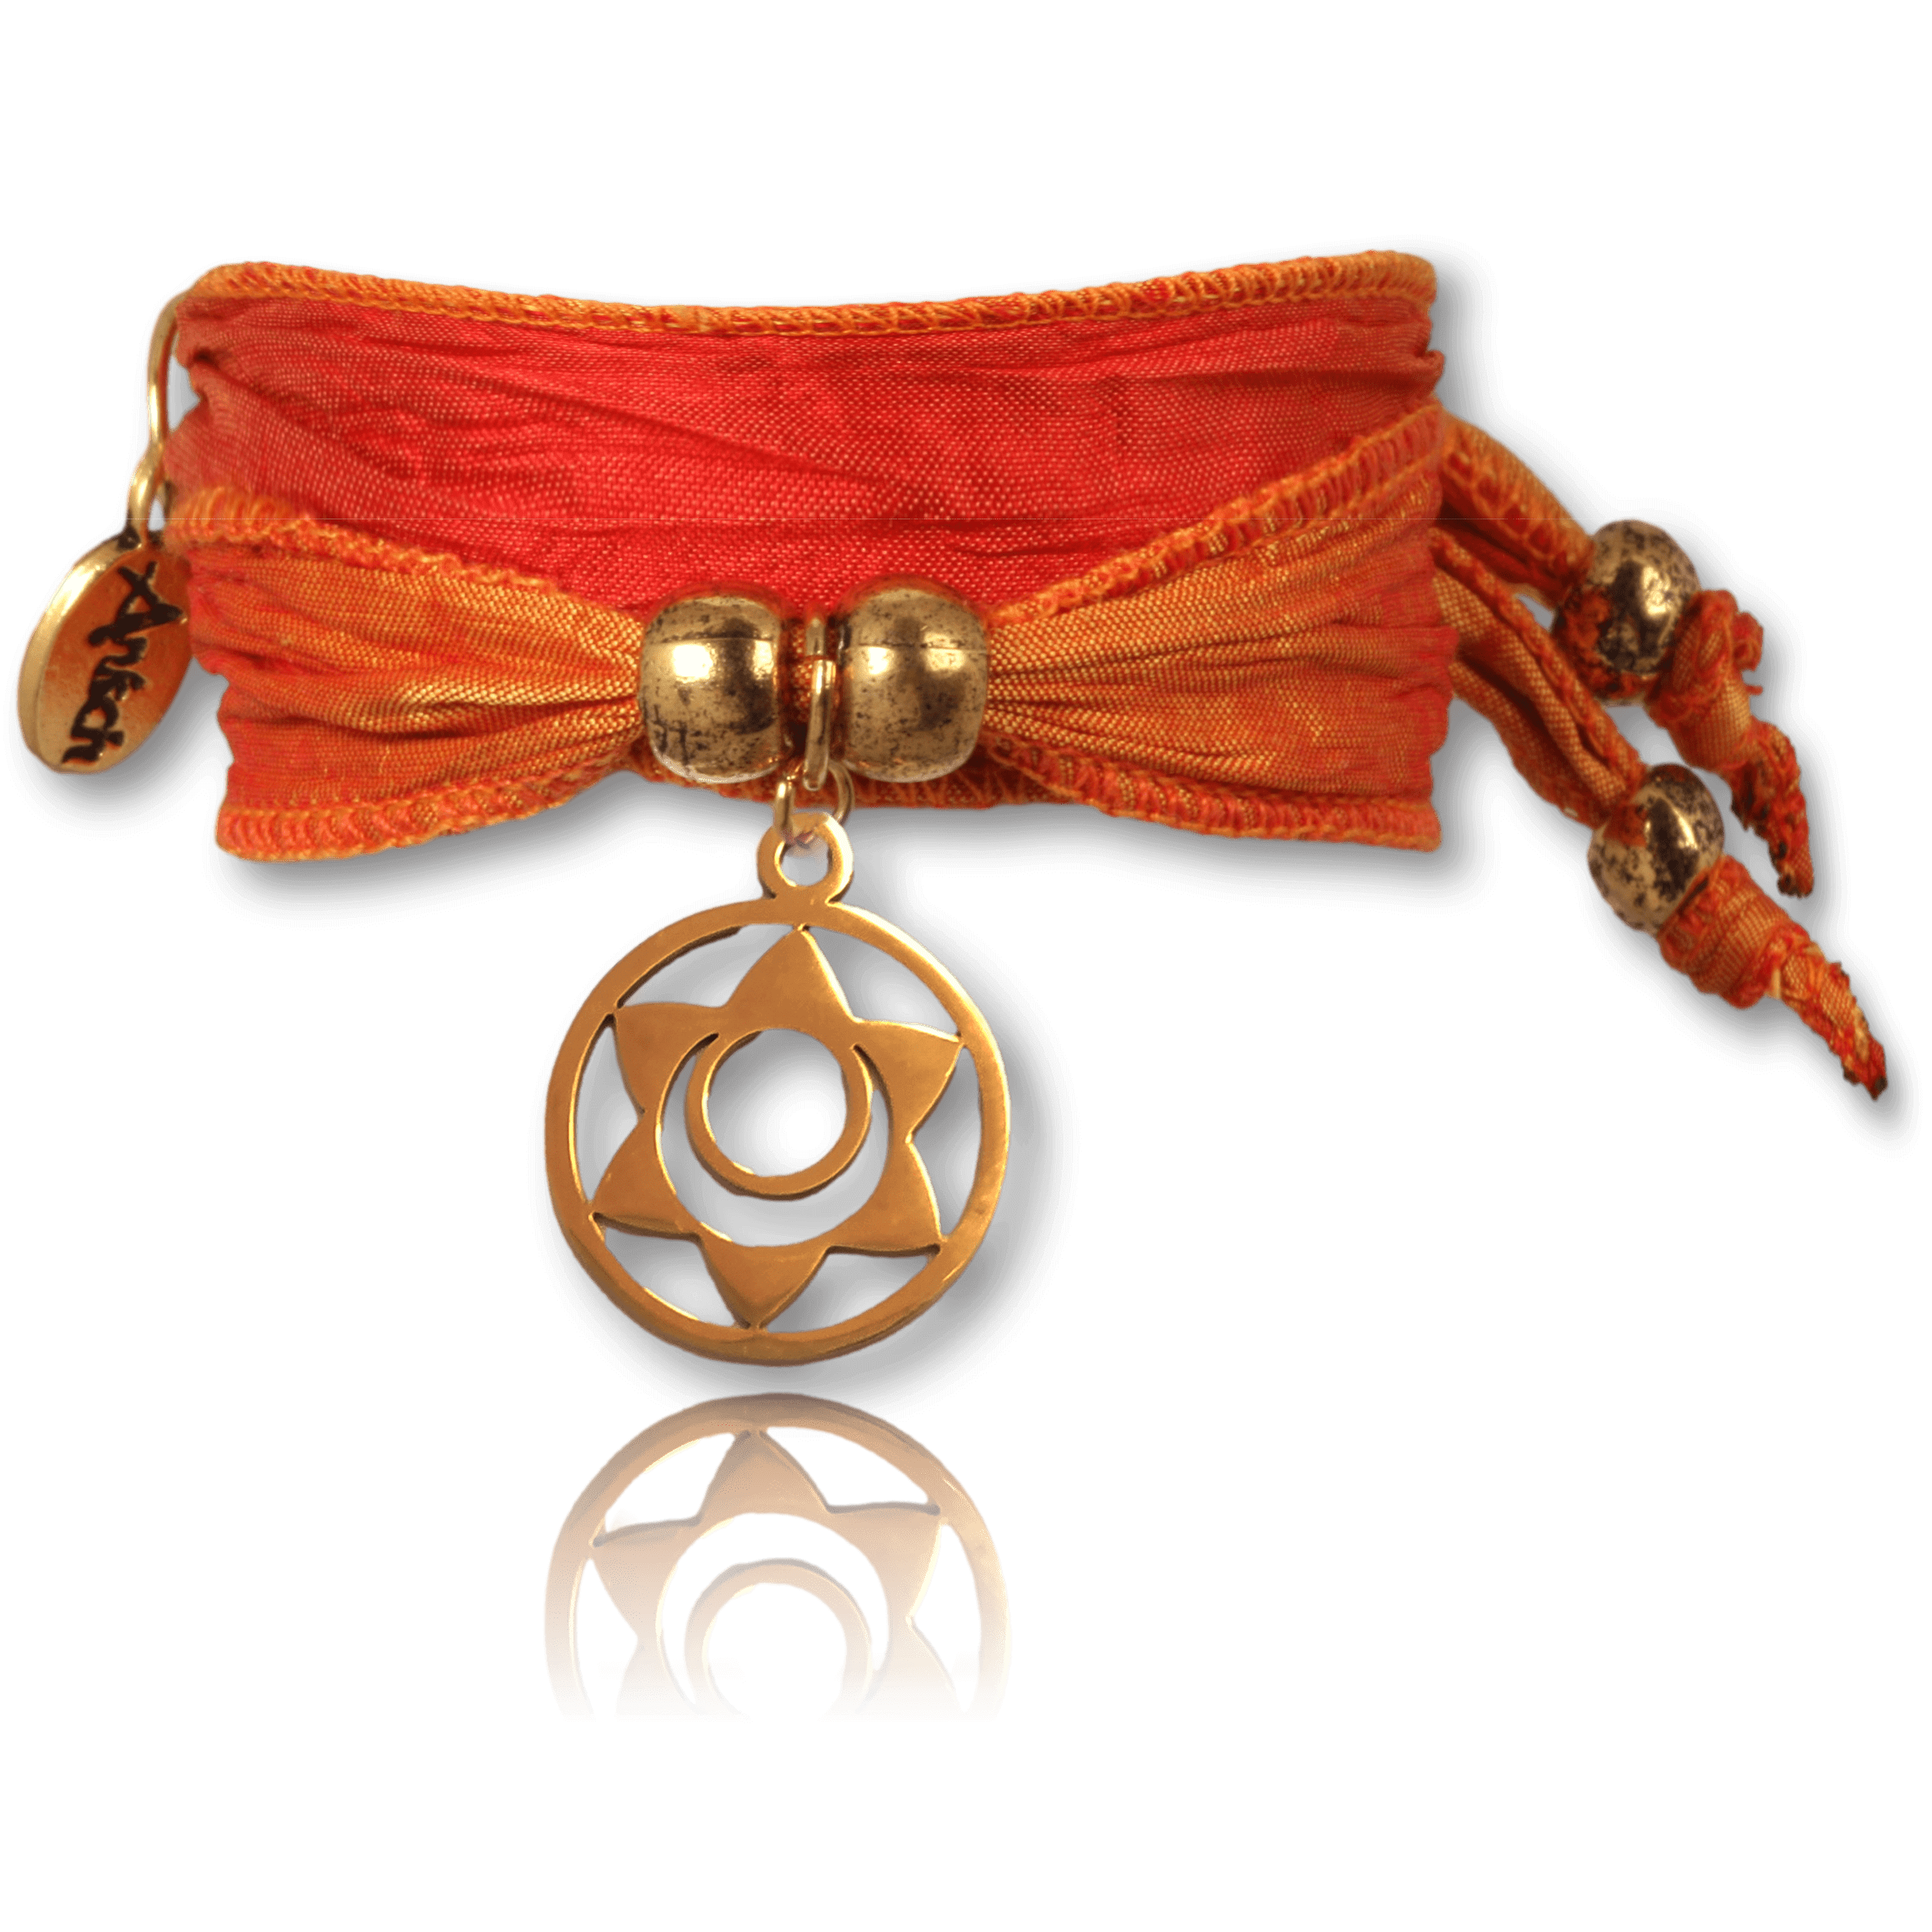 Svadisthana gold plated - sacral chakra bracelet for joy of life & abundance